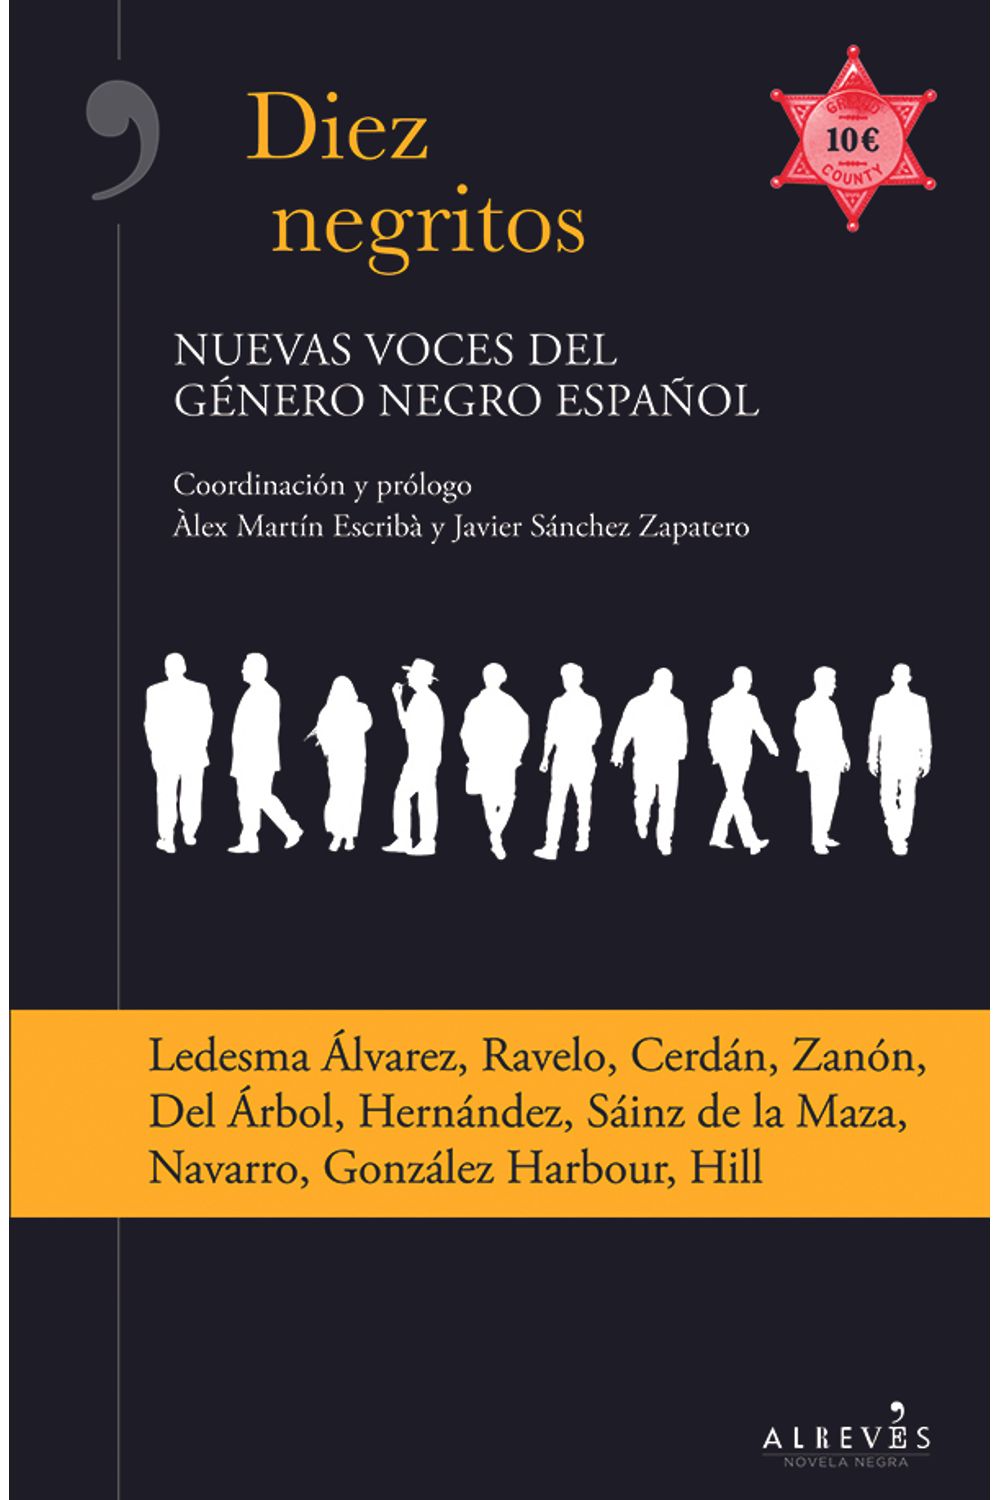 bm-diez-negritos-nuevas-voces-del-genero-negro-espanol-alreves-editorial-9788415900979